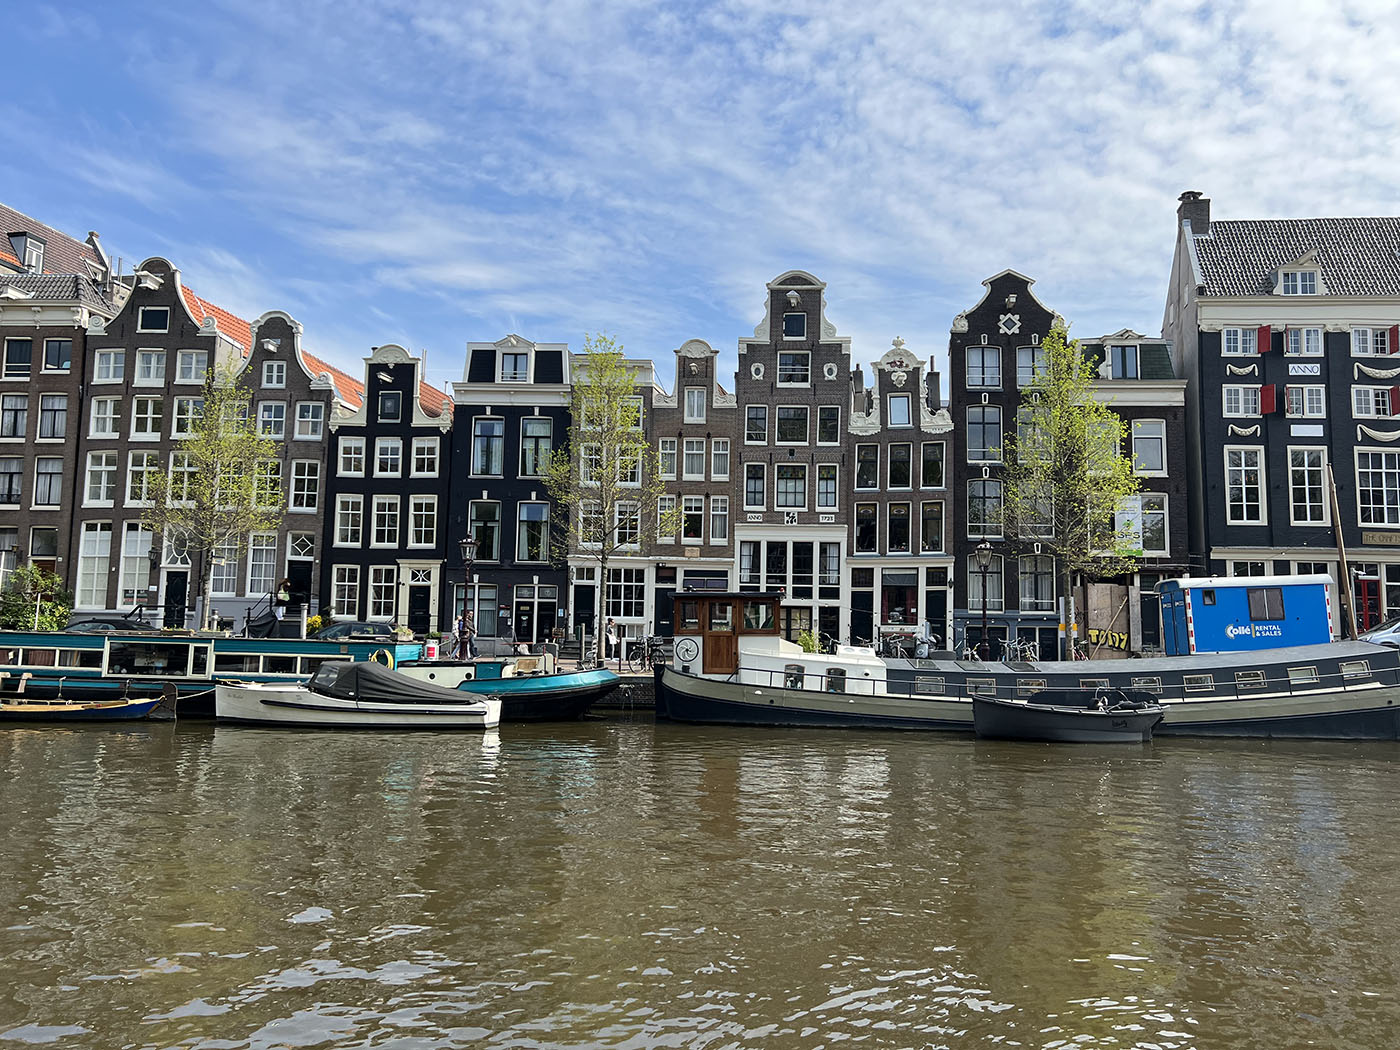 Amsterdam canal. The Netherlands. Credit: Carolina Valenzuela